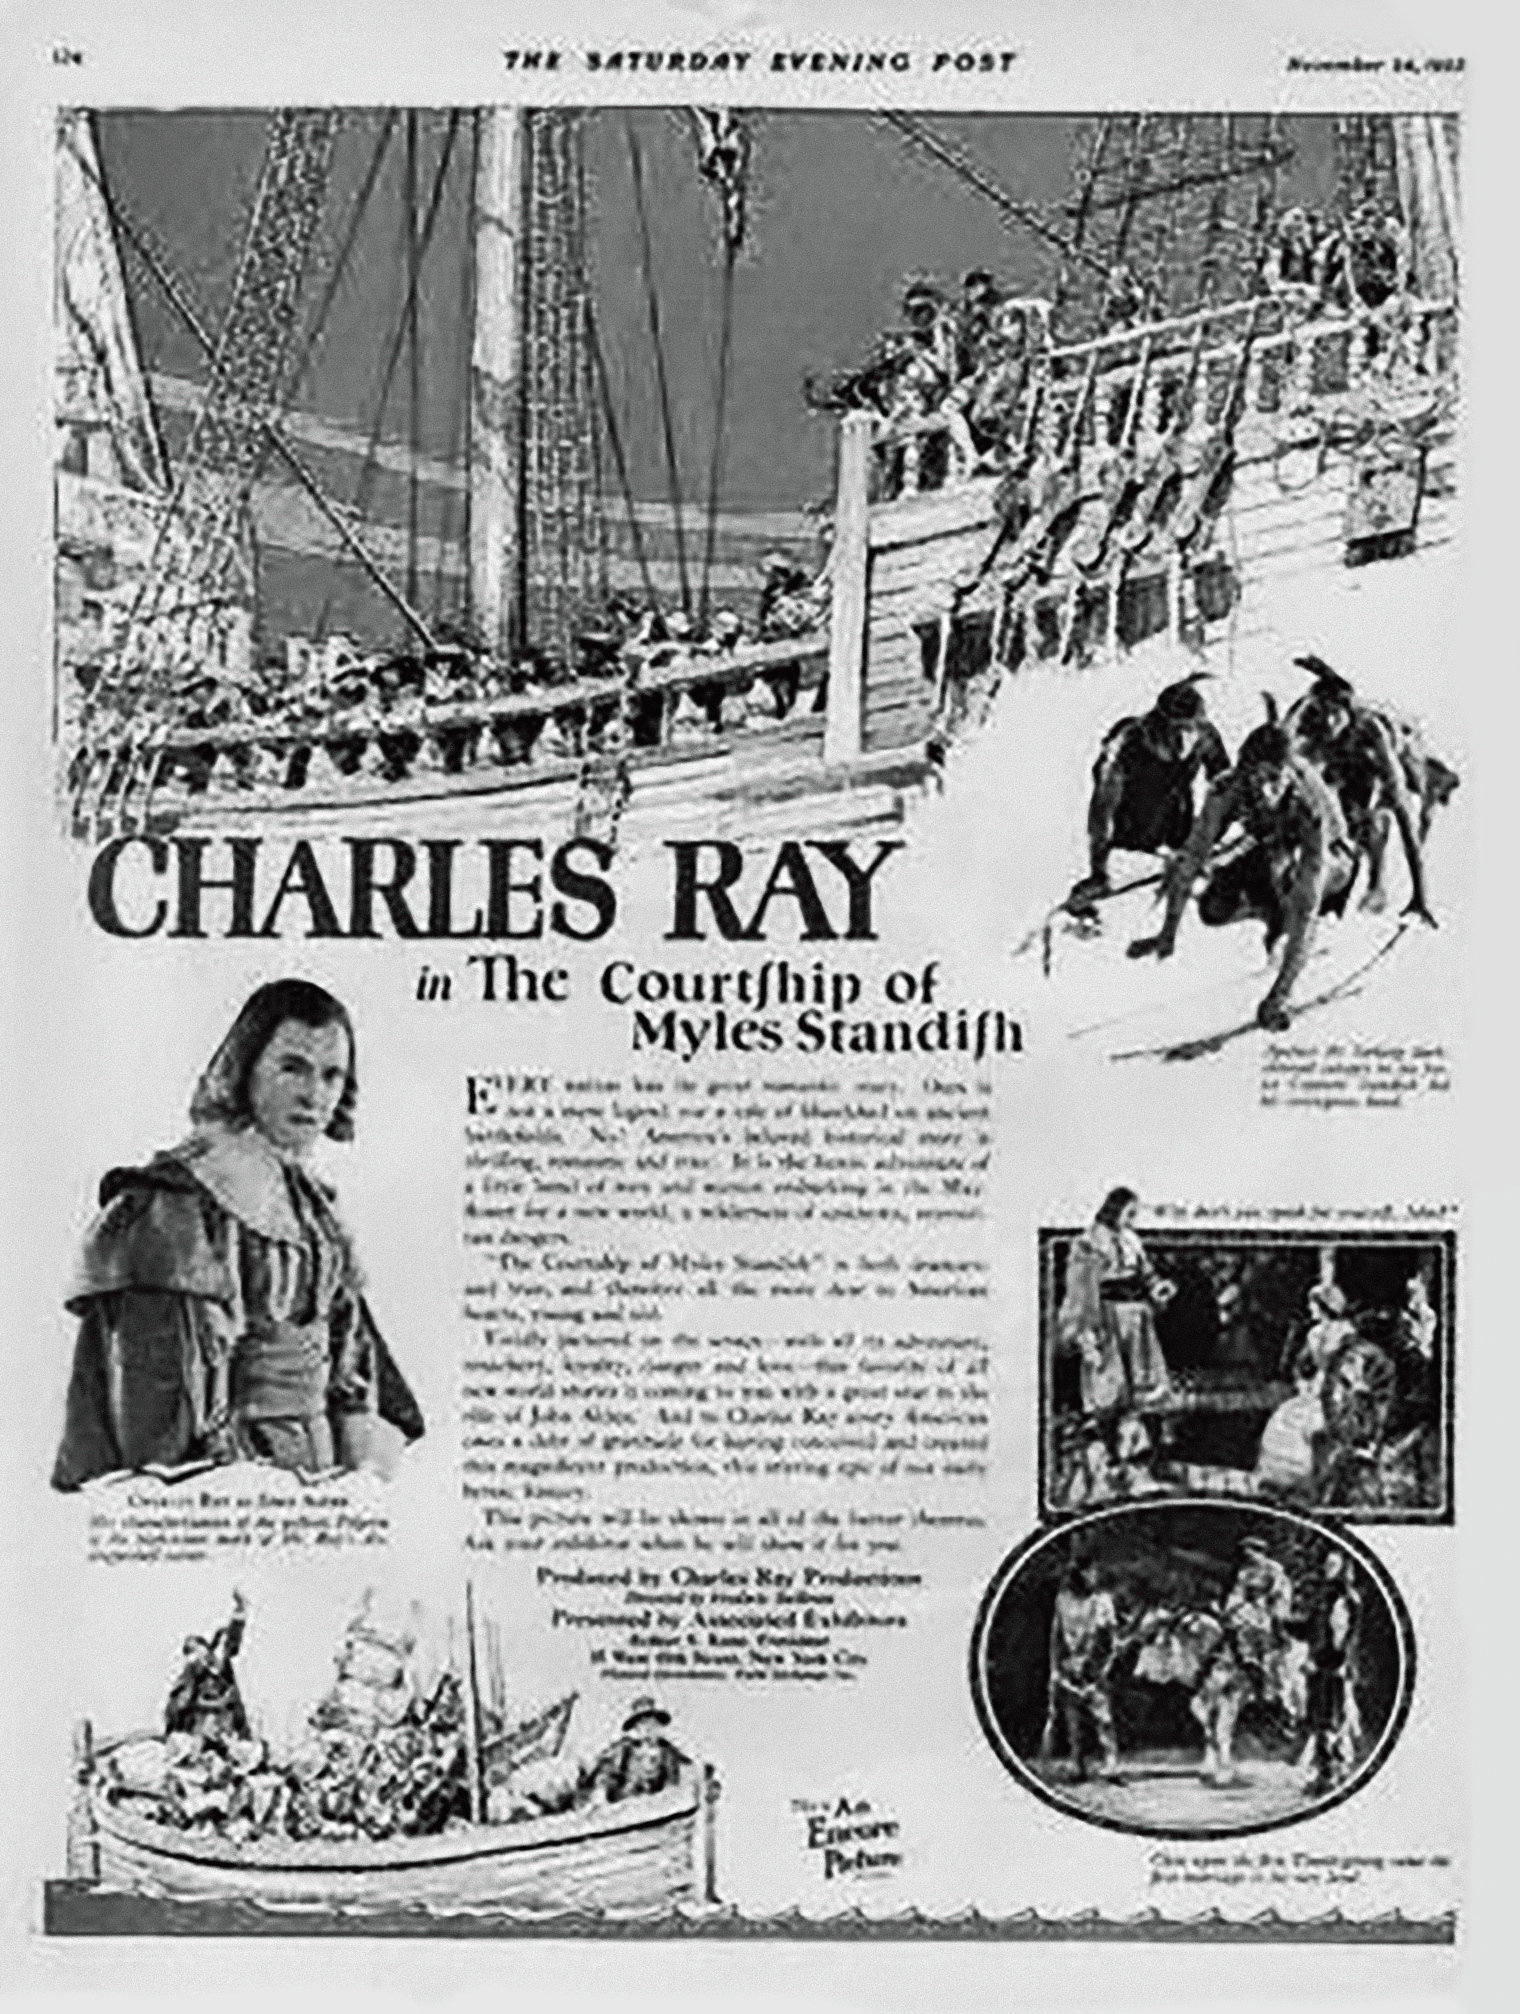 Charles Ray film